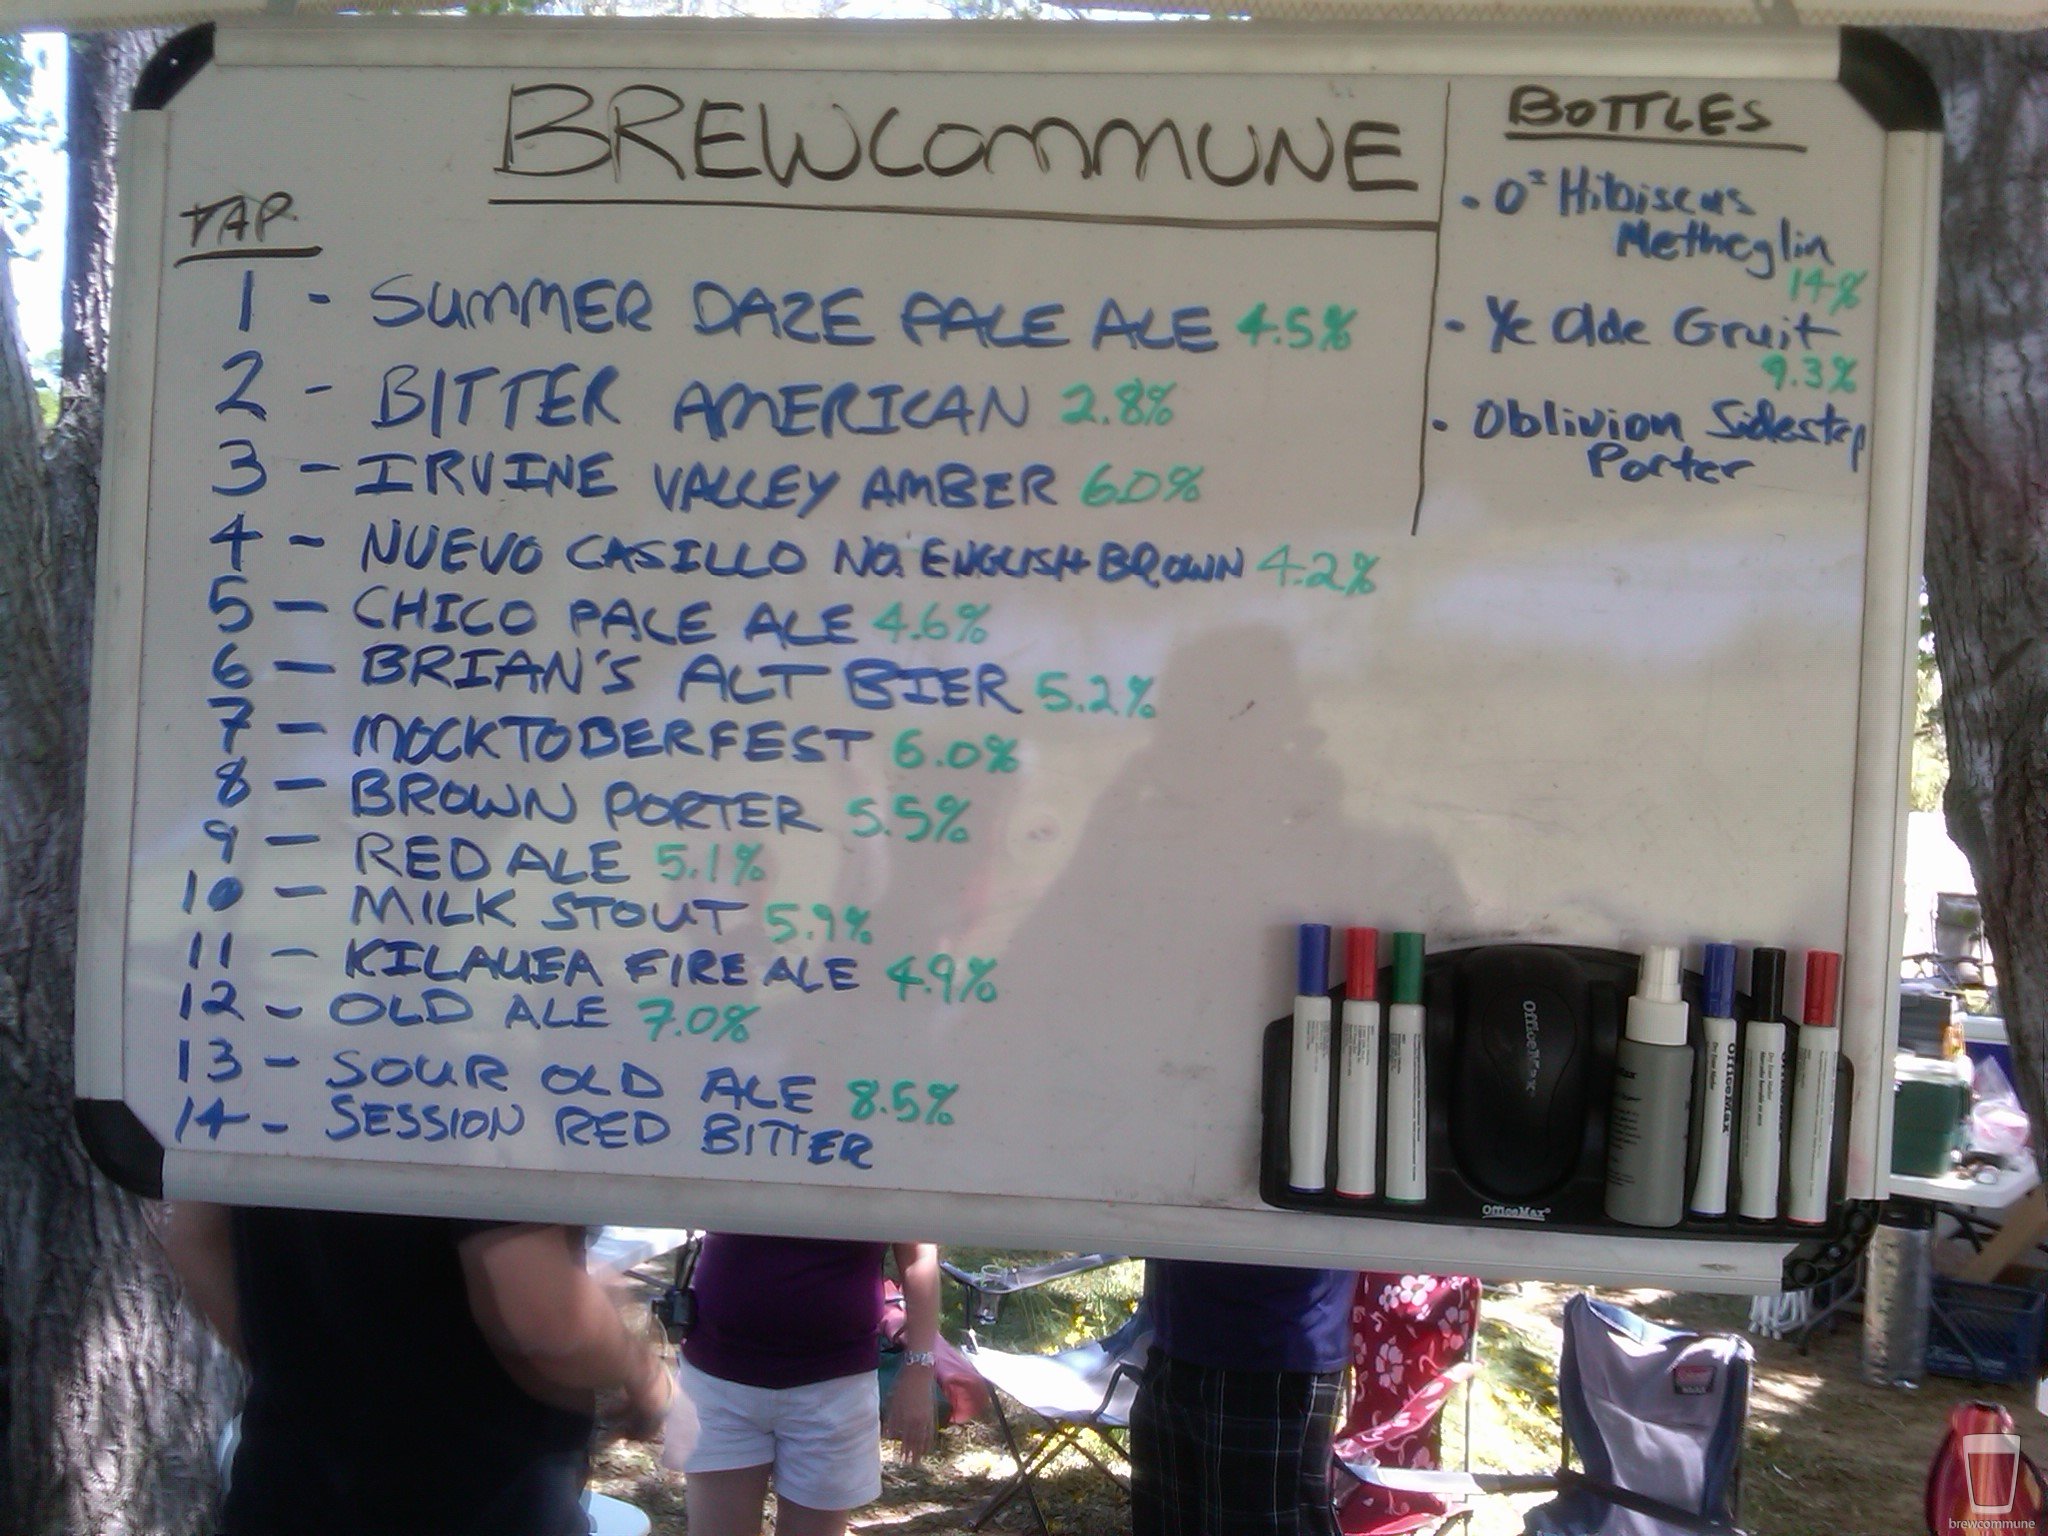 Brewcommune's initial tap list
